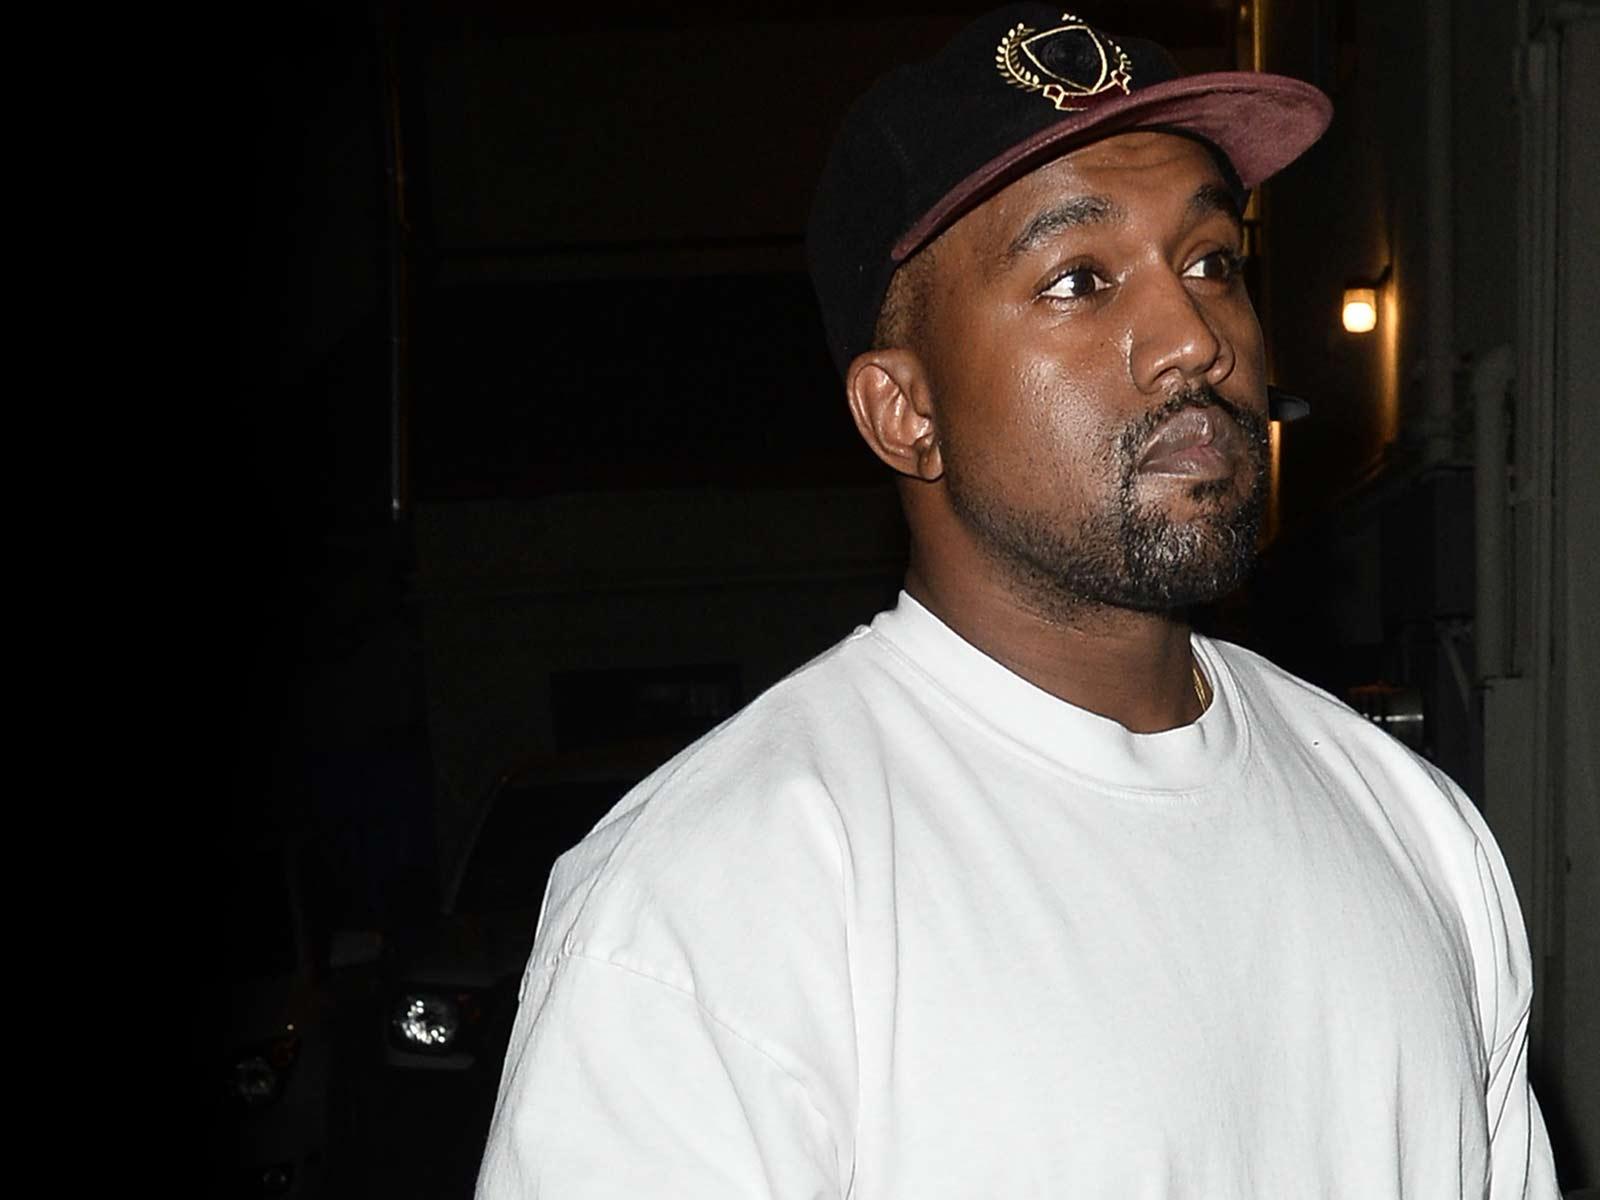 Kanye West Accused of Burning Turkey Over Yeezy Fashion Line Dispute